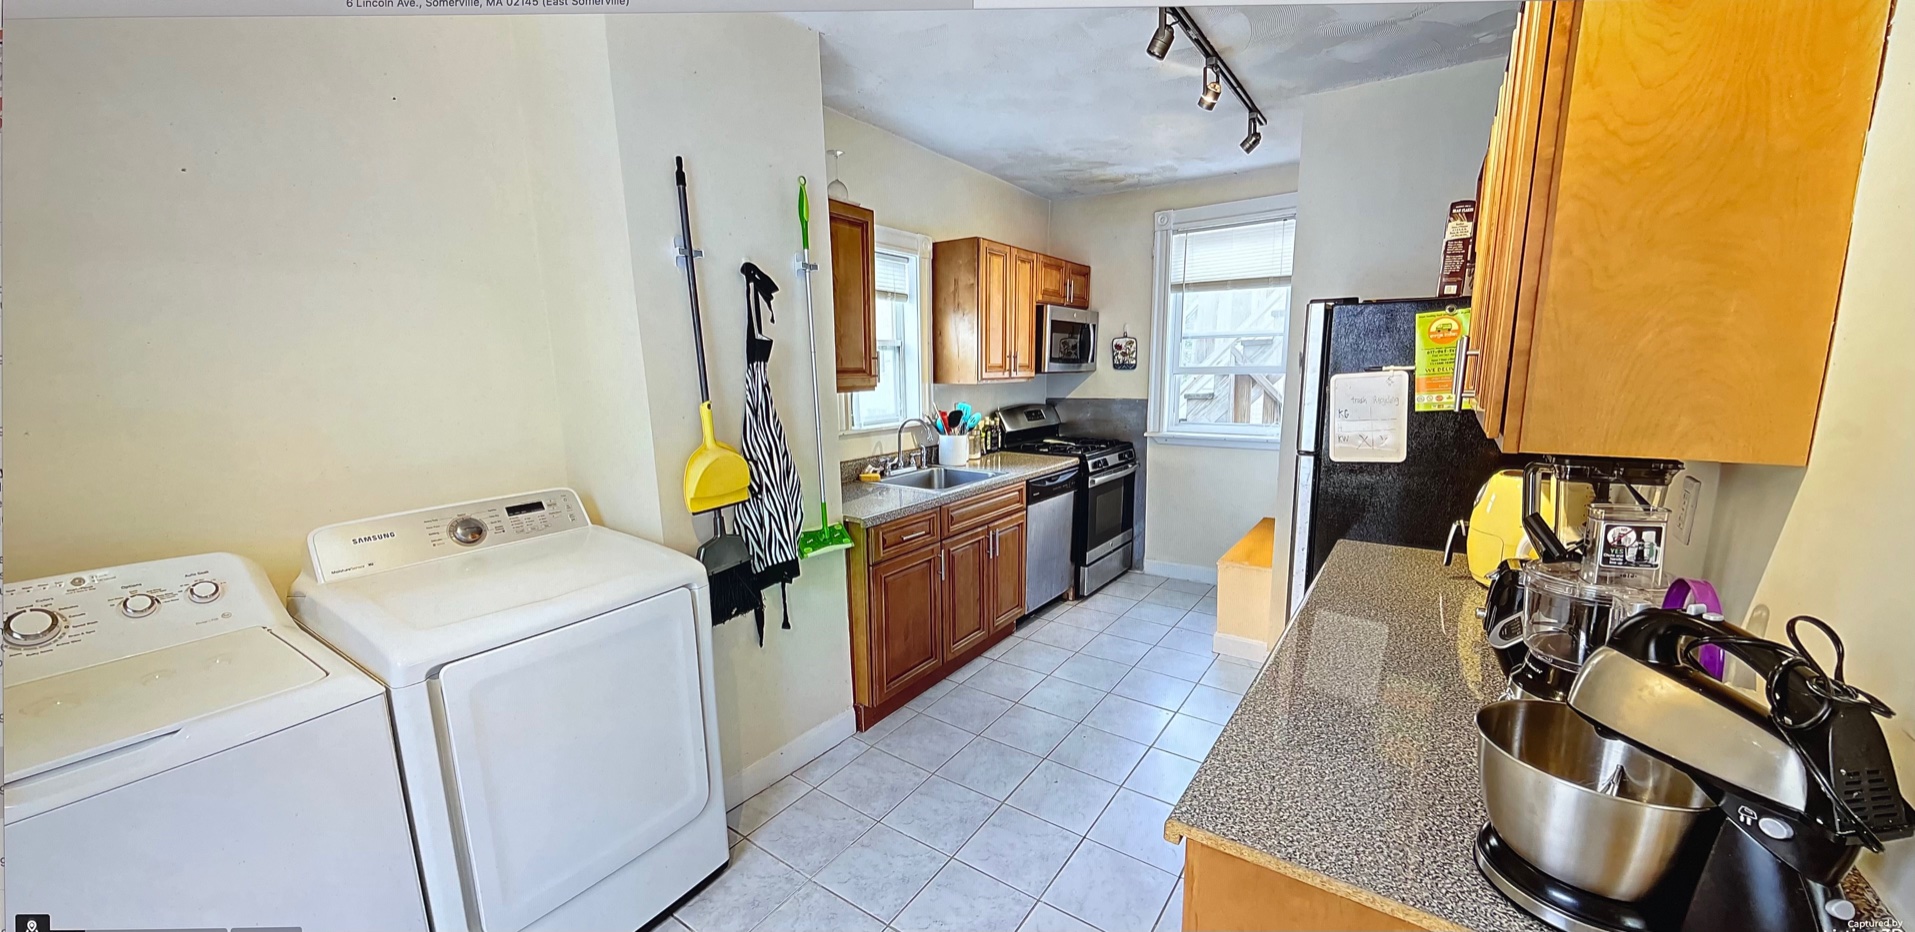 Photos of apartment on Edgar Ter.,Somerville MA 02145